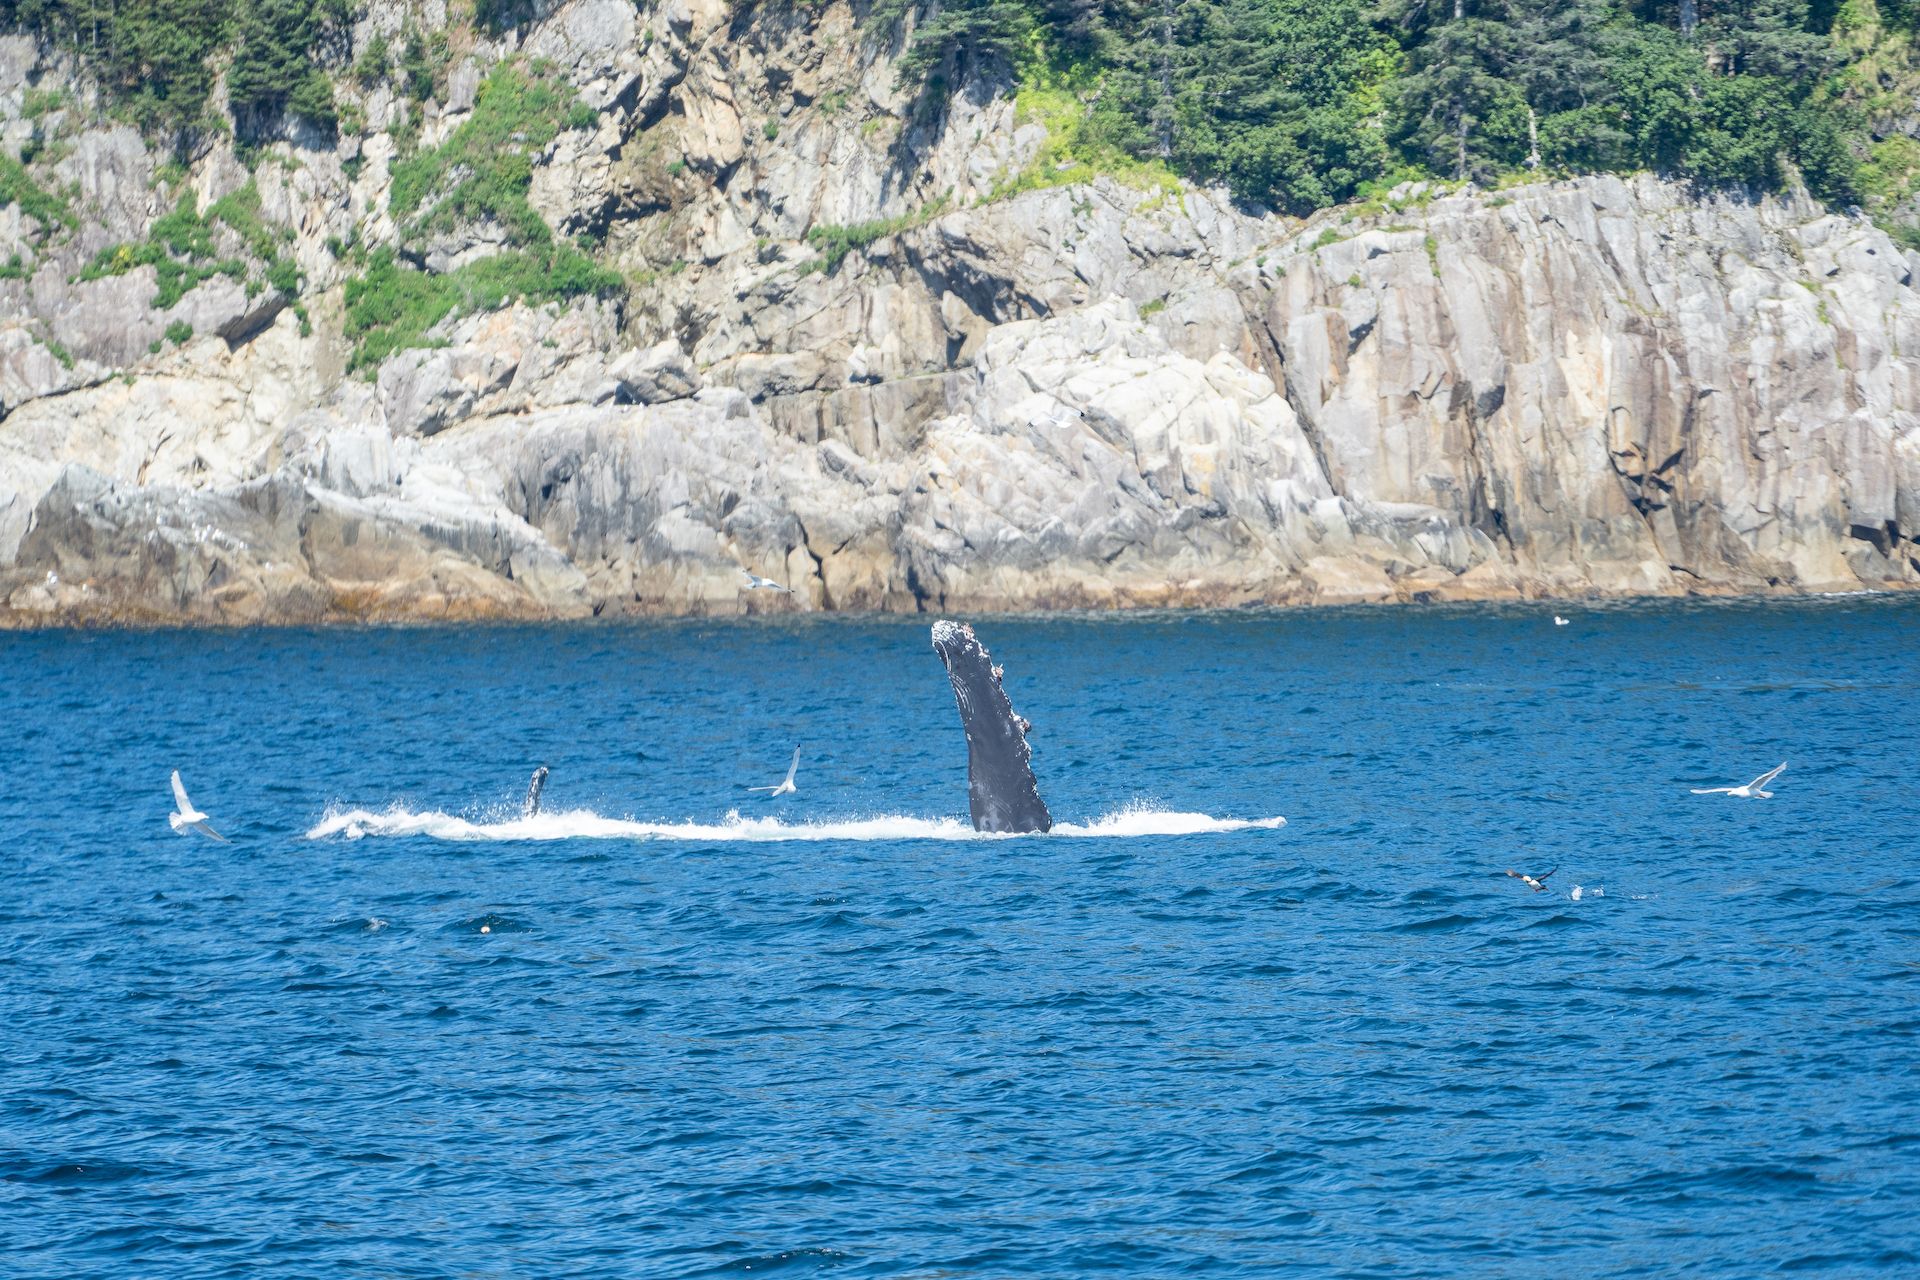 A humpback whale waving at us 👋